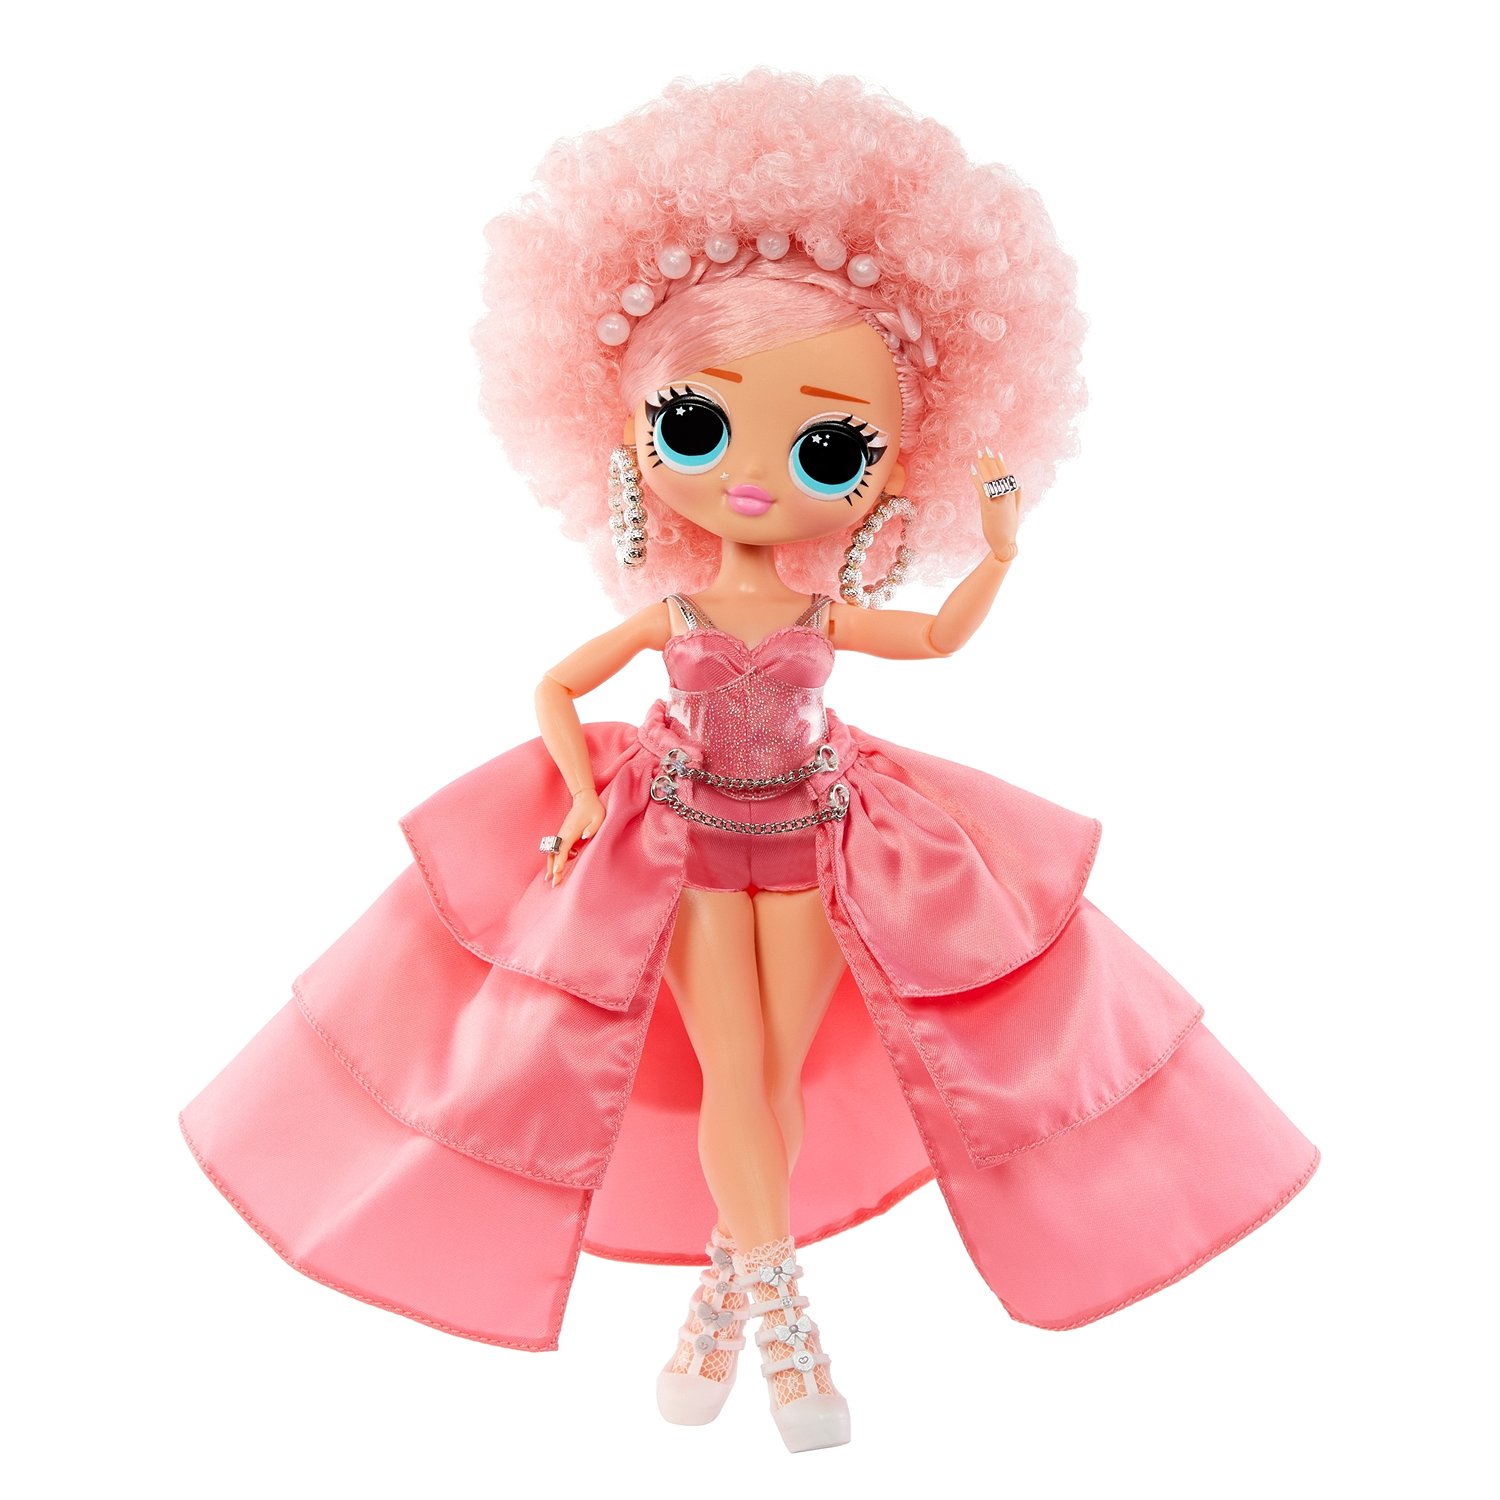 Кукла L.O.L. Surprise! OMG Birthday Doll Miss Celebrate 579755EUC